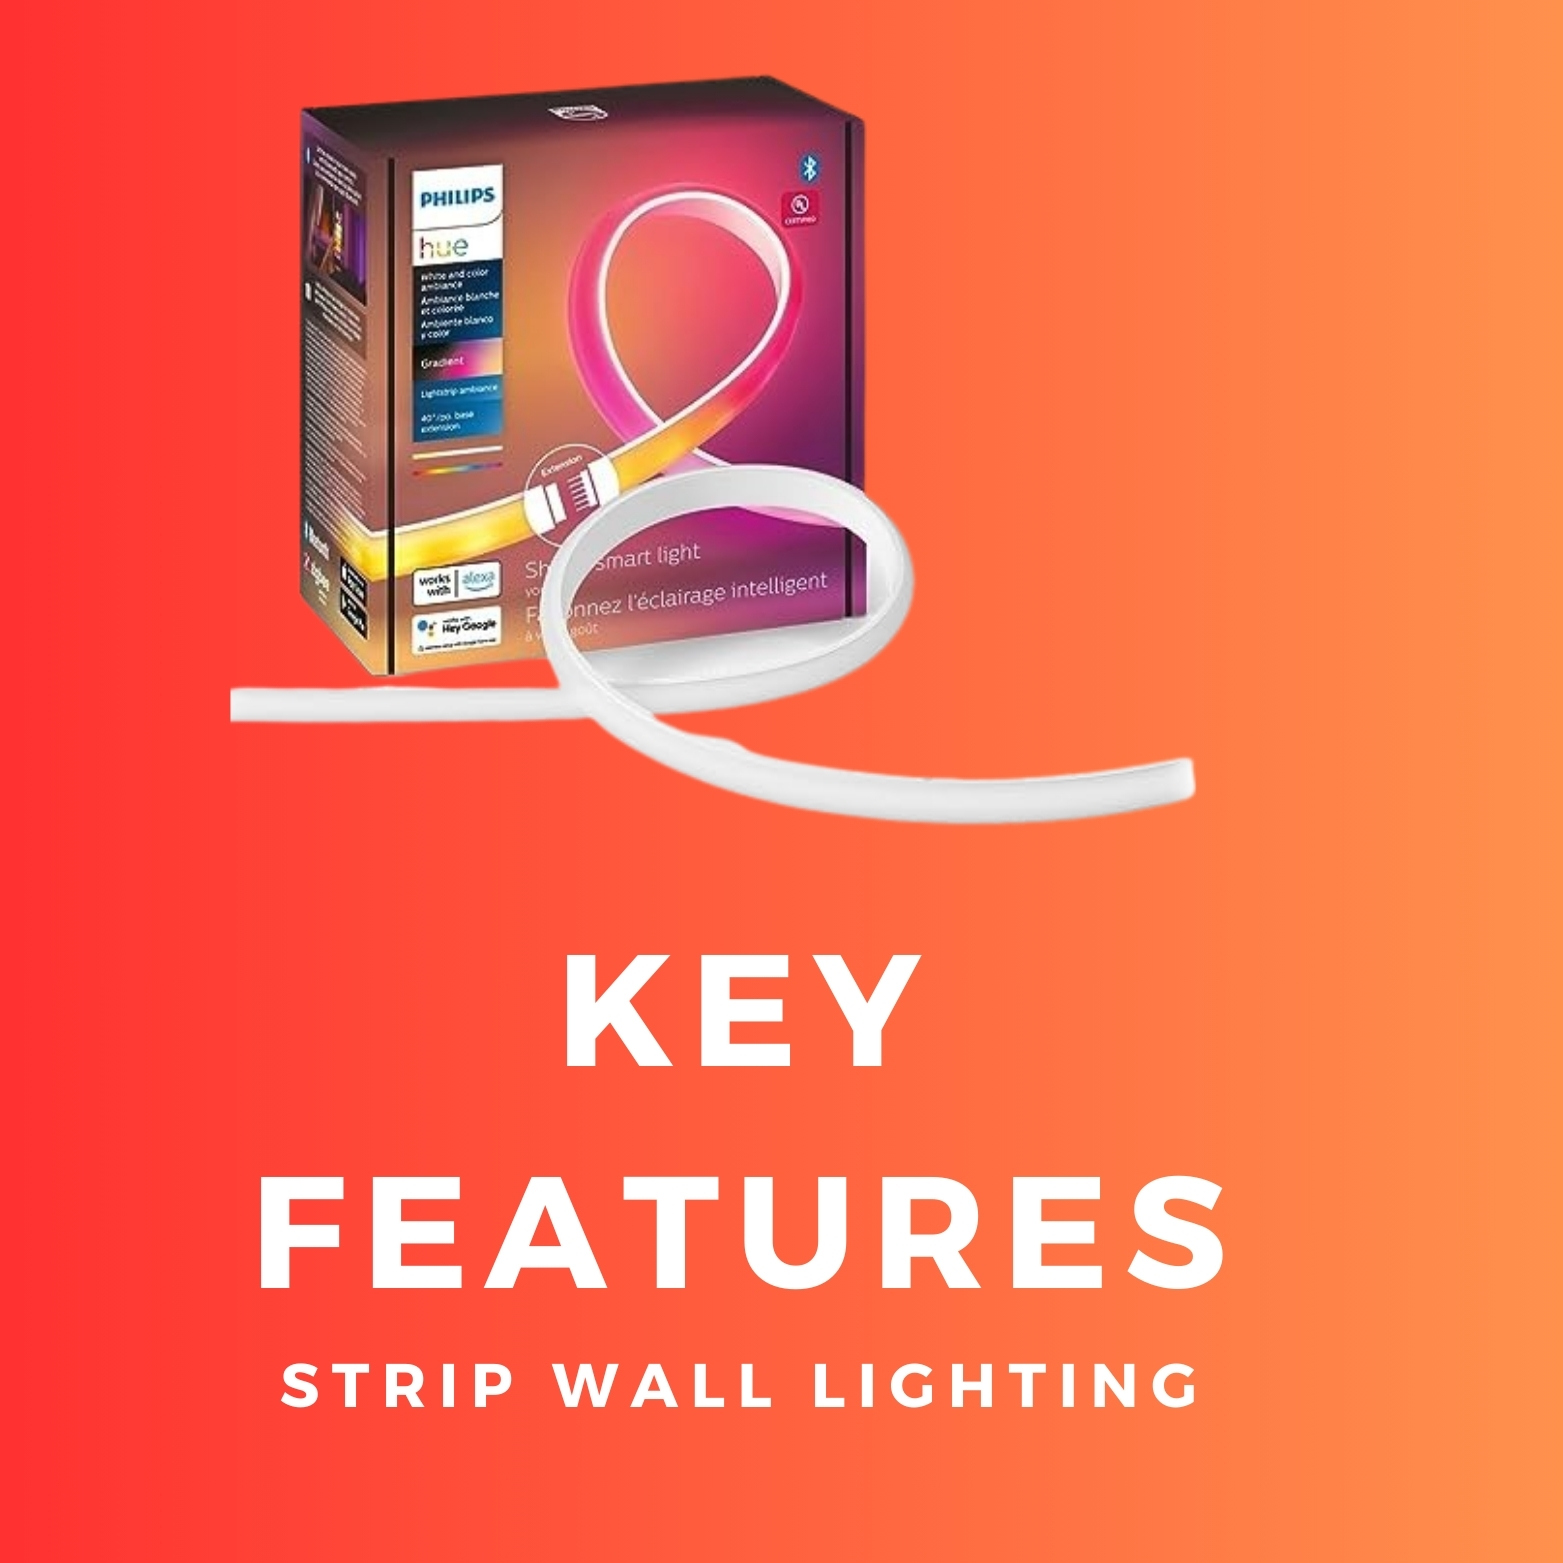 Wall LED Strip Lighting